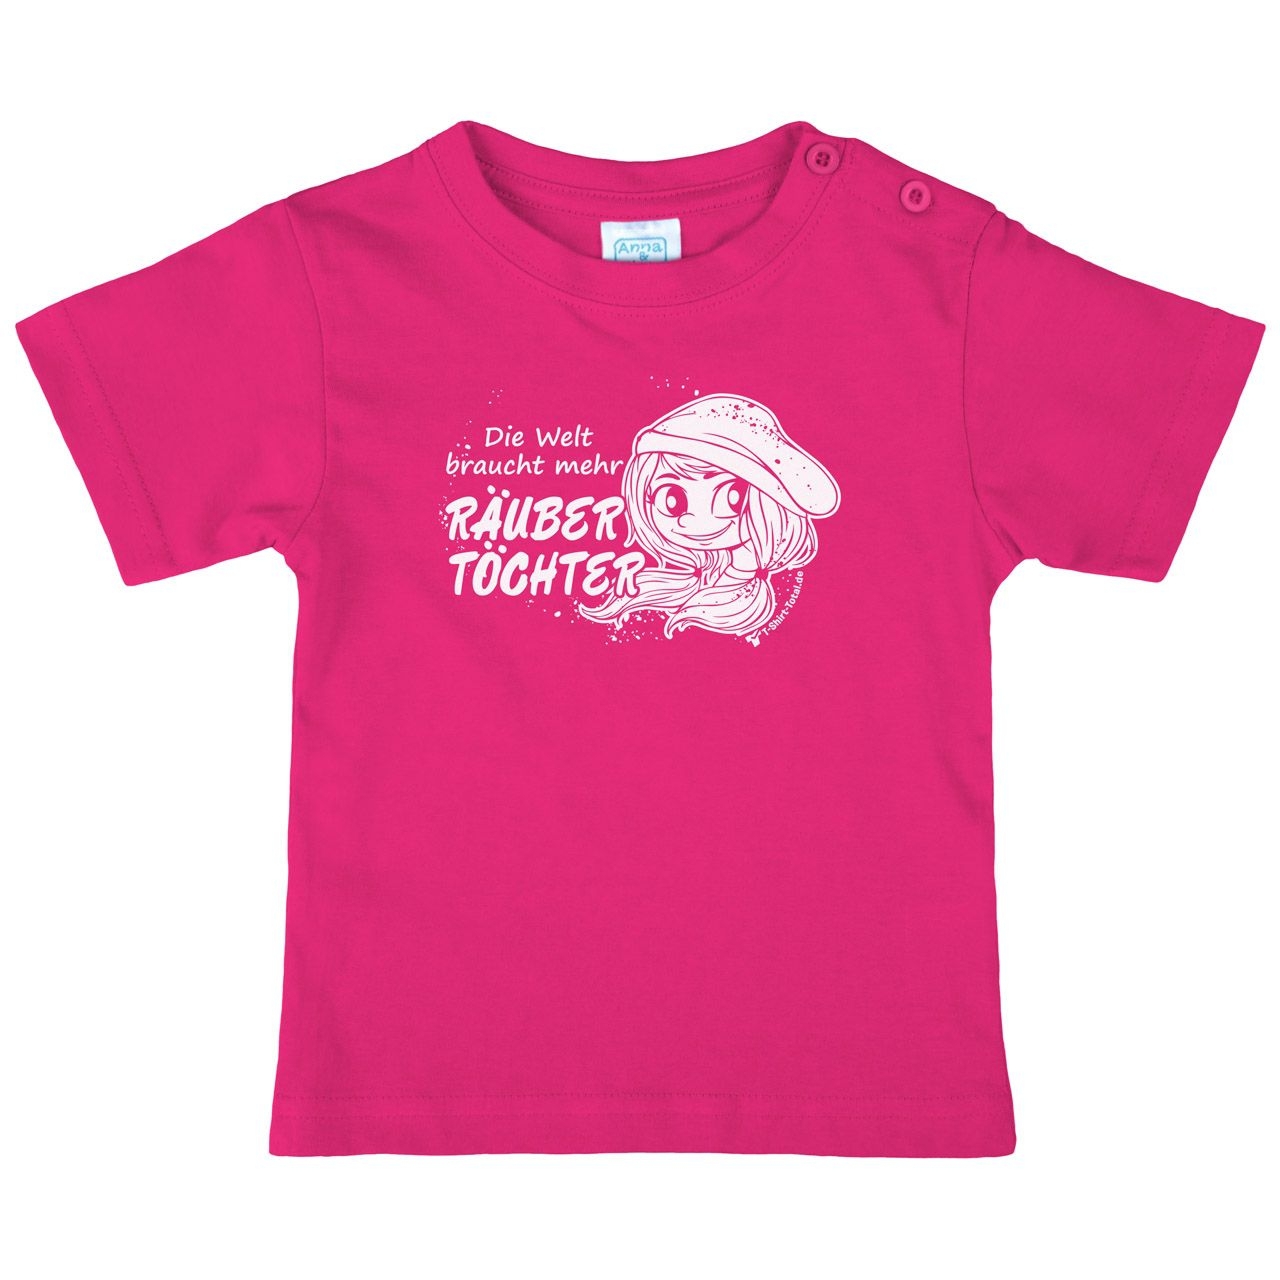 Räubertöchter Kinder T-Shirt pink 110 / 116